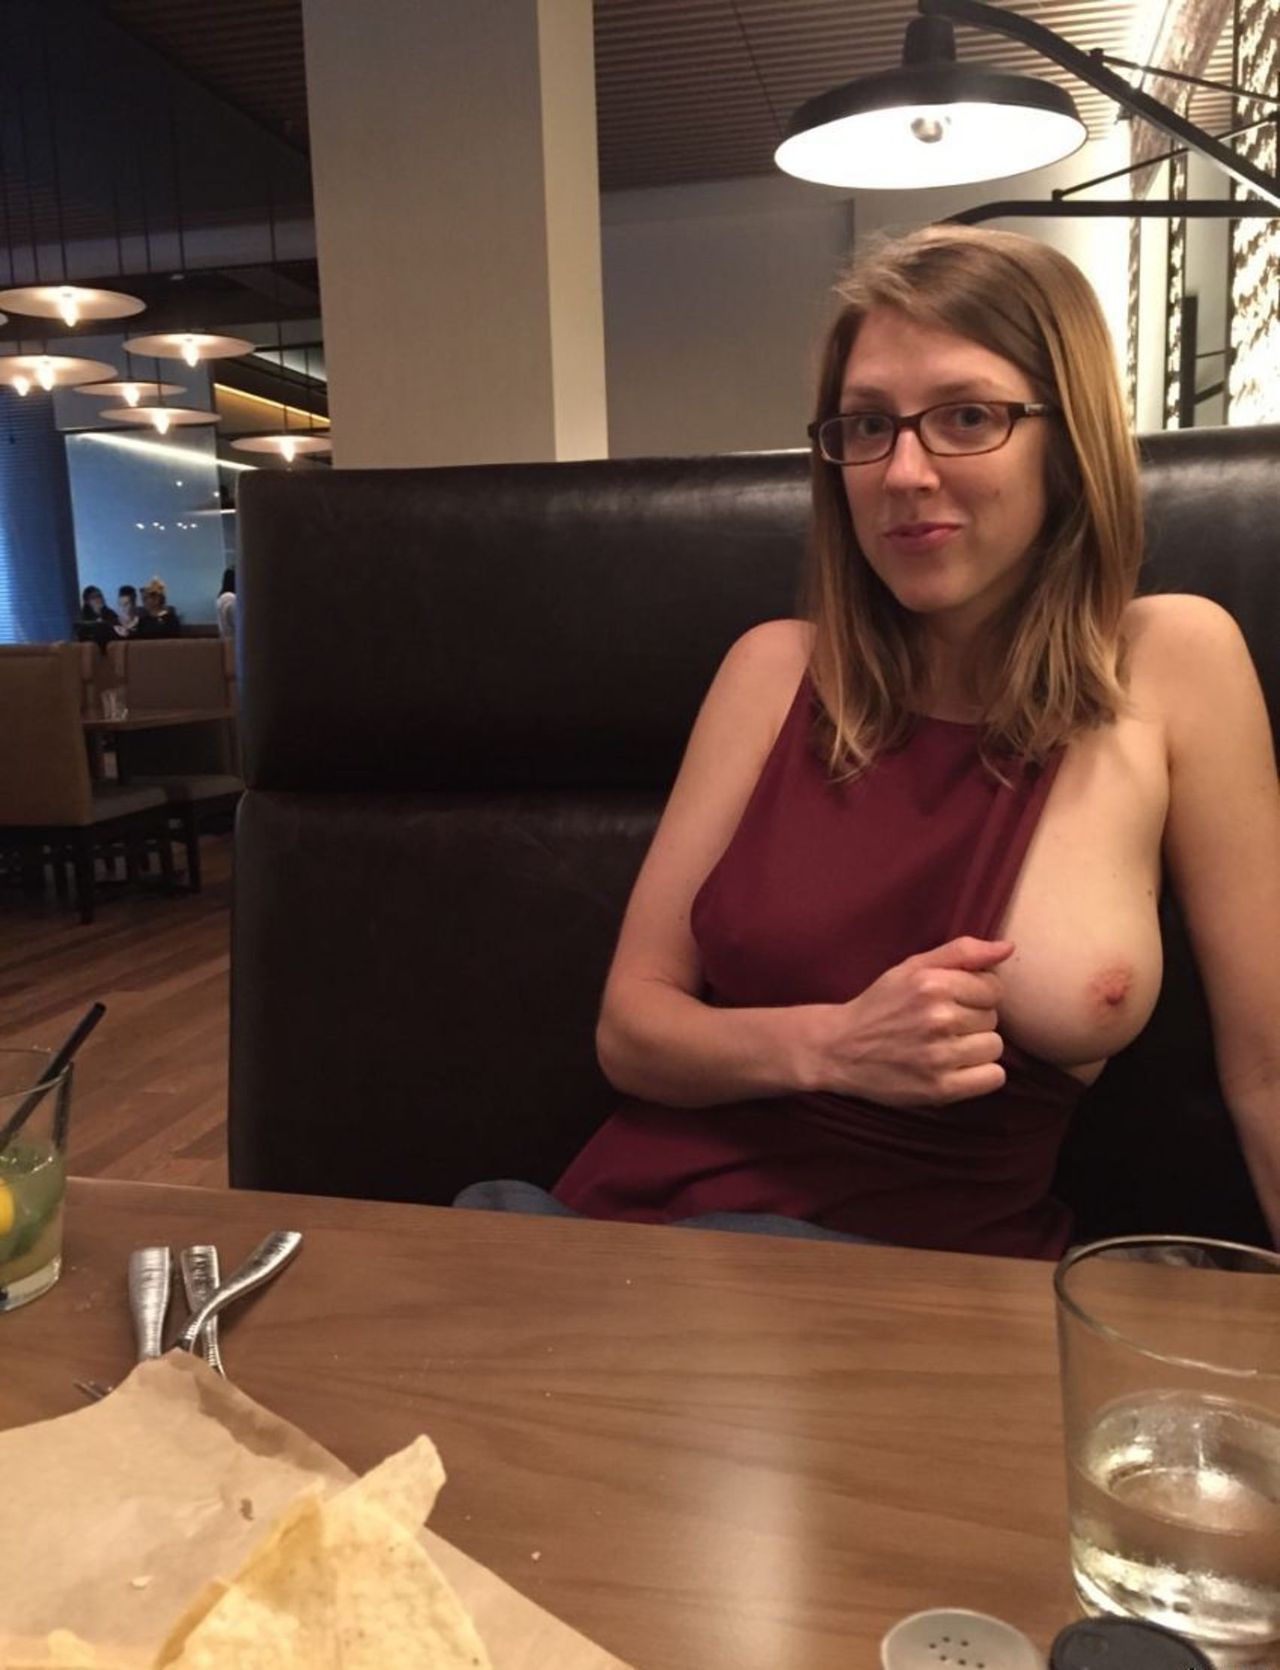 itskkiss:  carelessinpublic:  Showing her big boobs inside a restaurant  Your wife’s